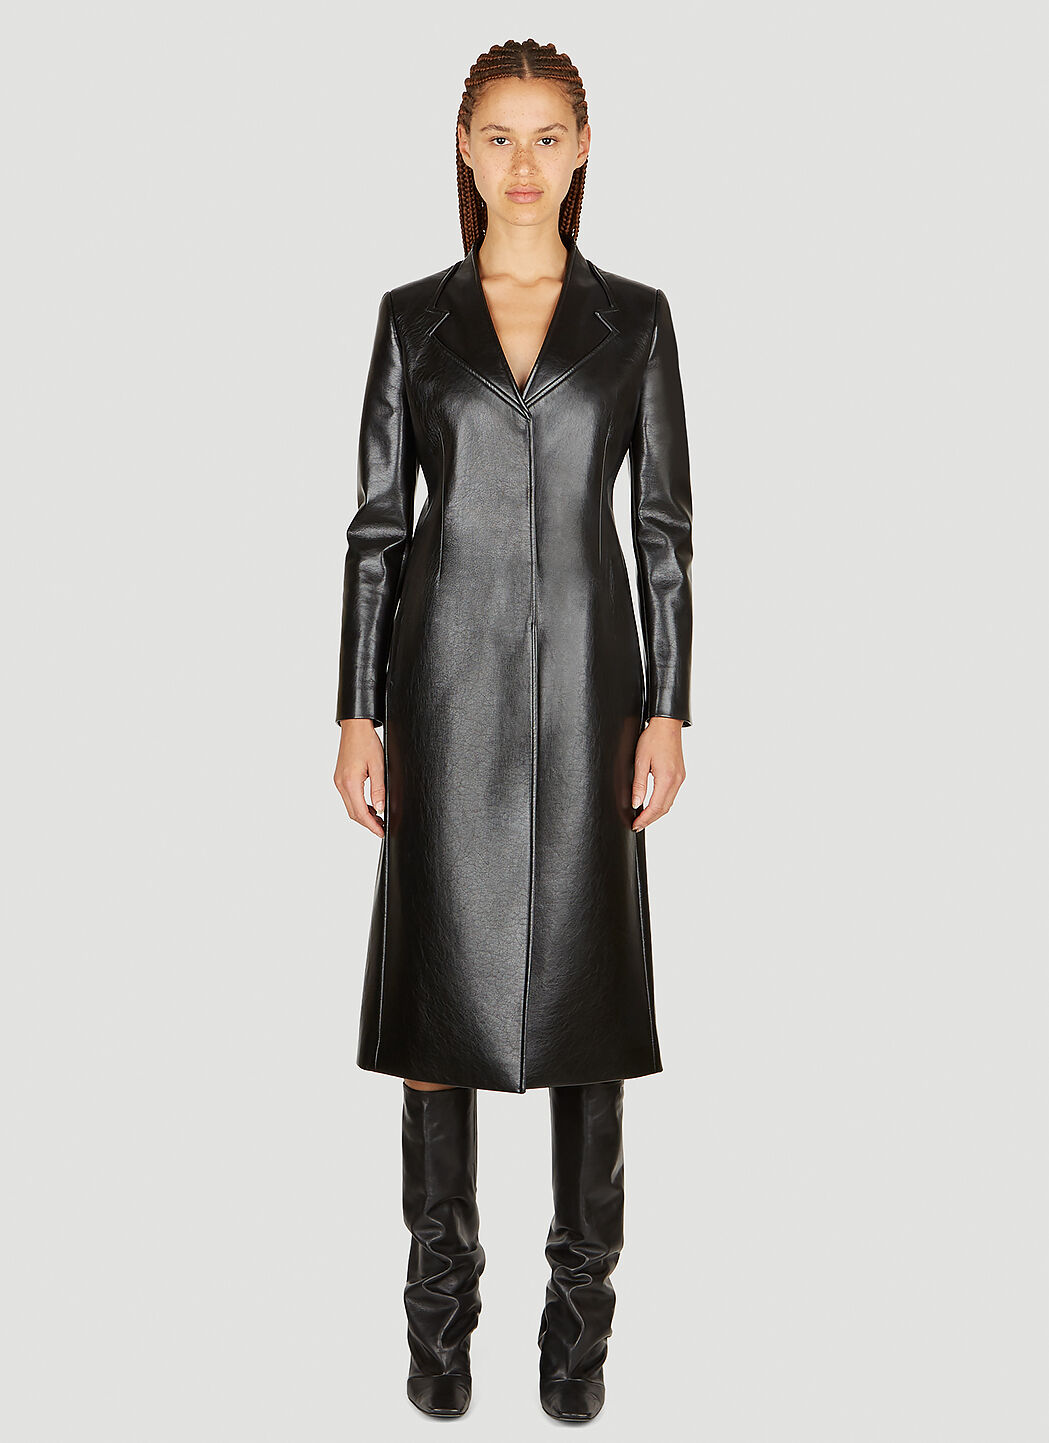 Coperni Trompe-Loeil Tailored Faxu Leather Coat Black cpn0251012